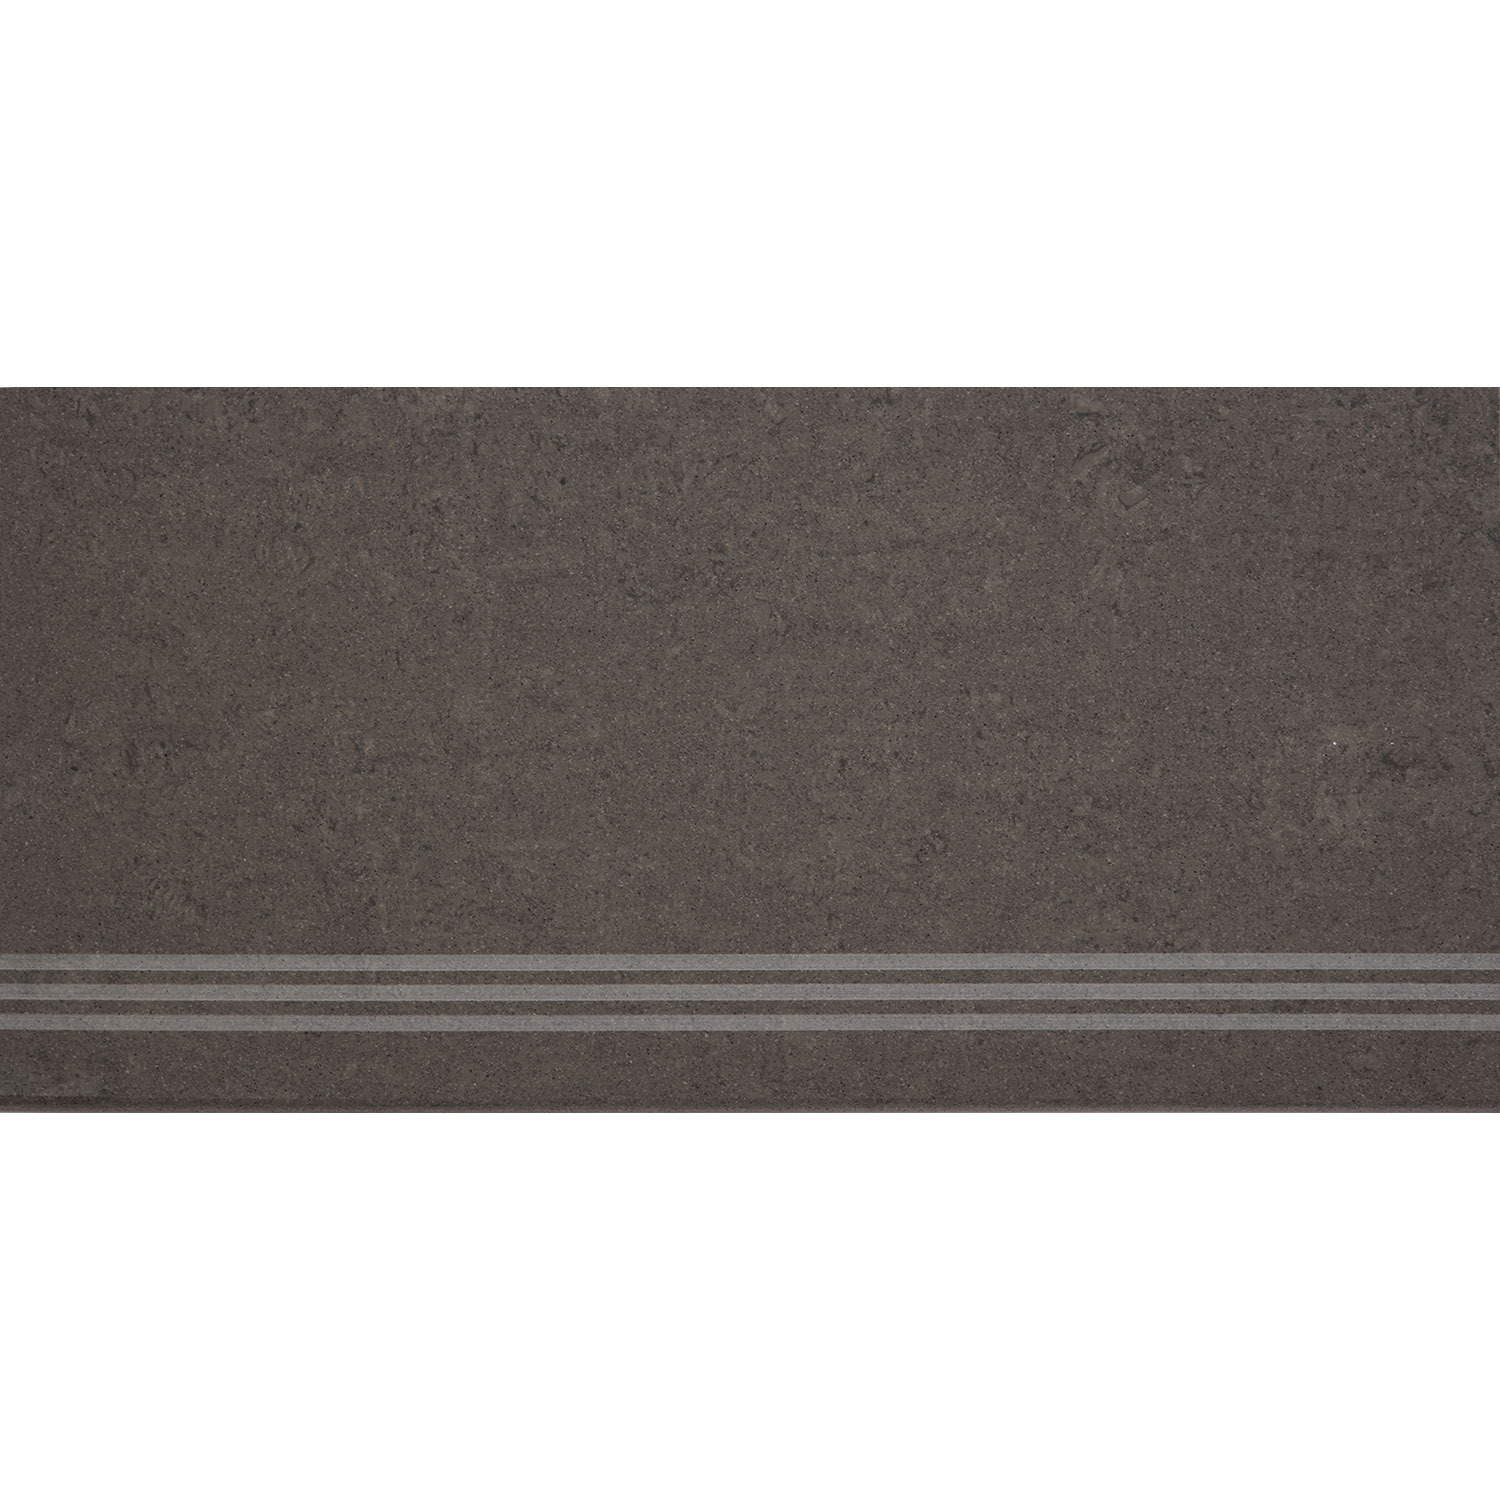 Klinker Arredo Fojs Collection Steel Glossy Grå 29,8×60 cm Trappsteg/Trappnos